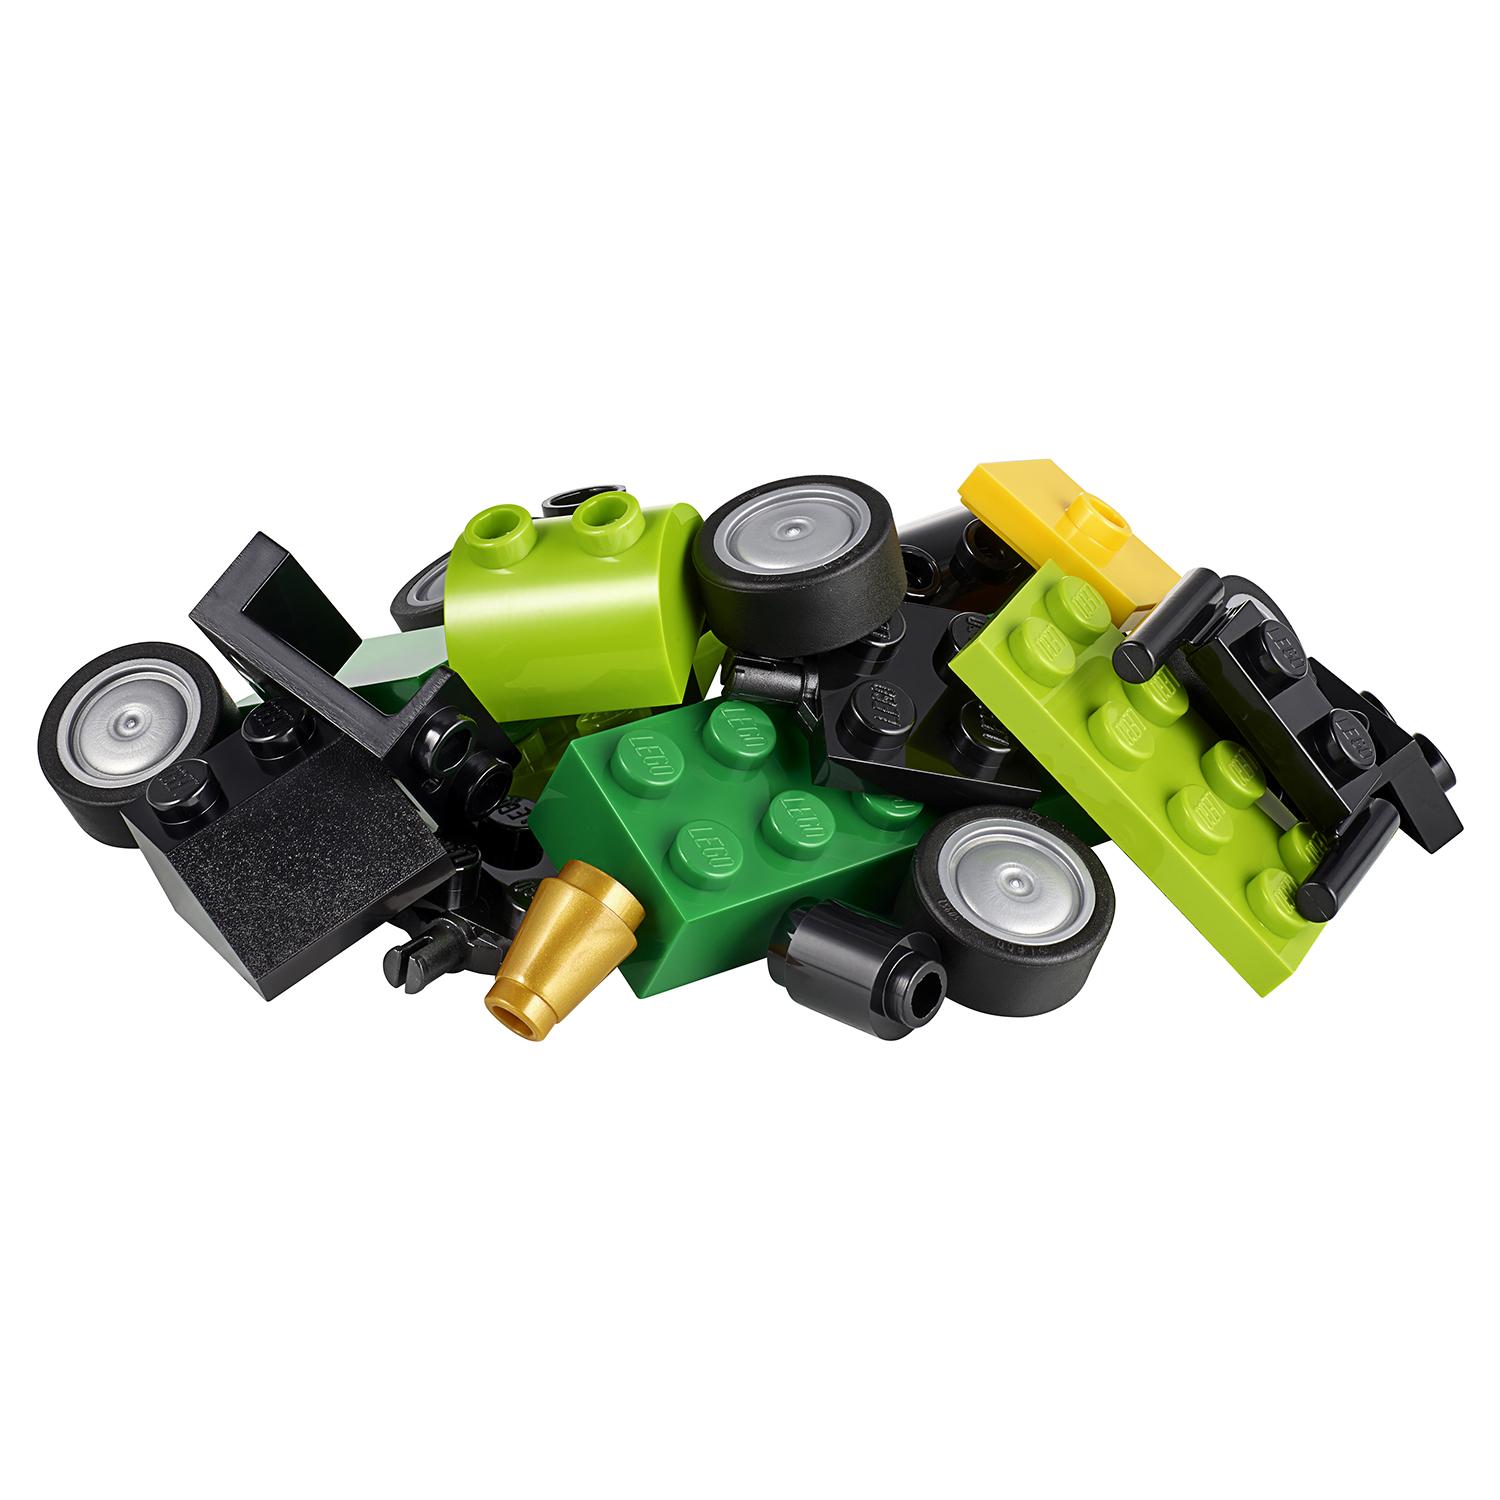 Конструктор LEGO Classic - Модели из кубиков